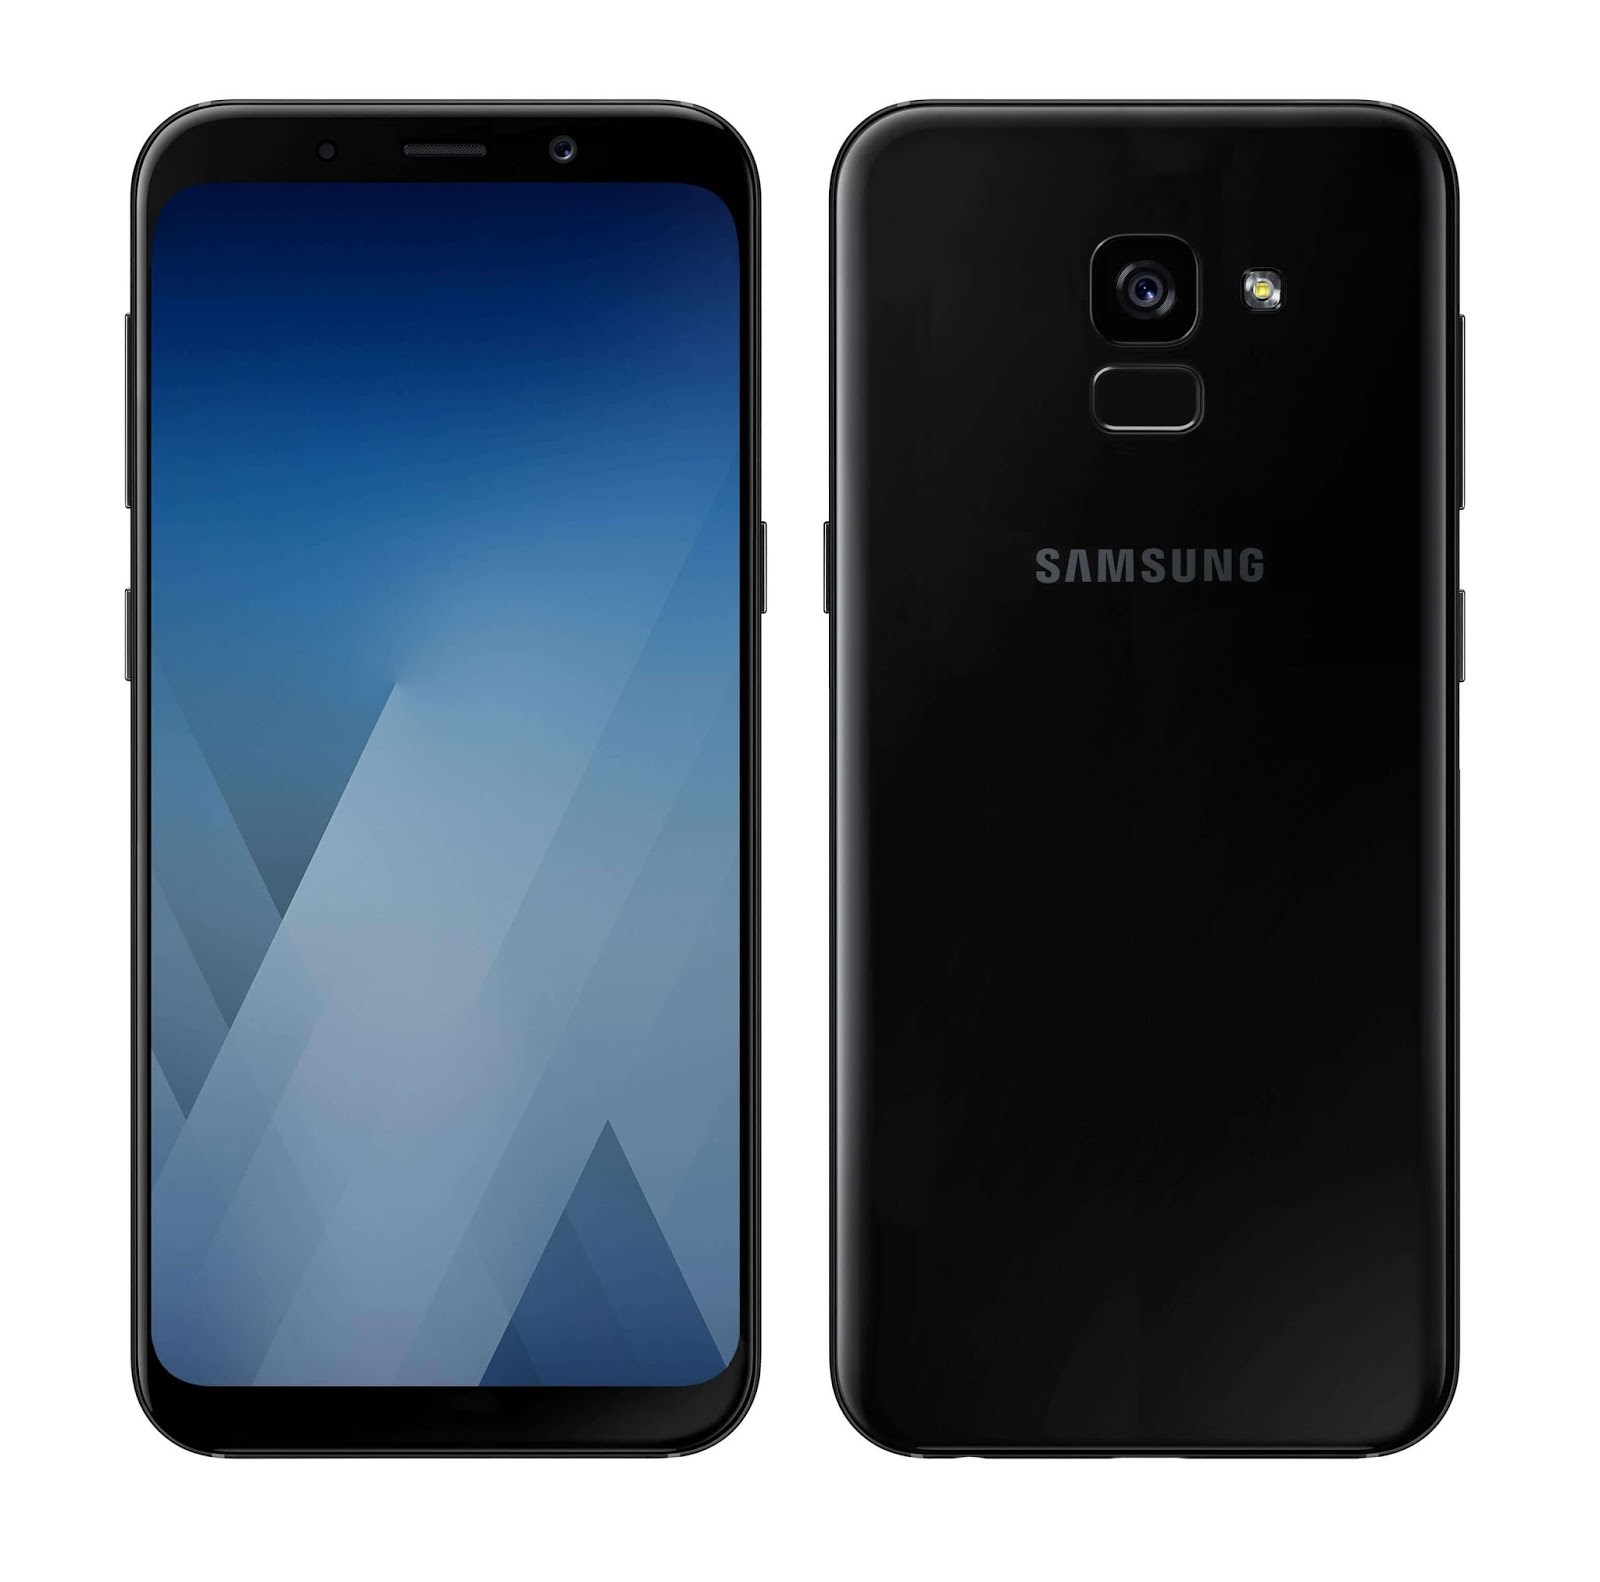 Телефон 2018 г. Samsung Galaxy a8 2018. Samsung Galaxy a5 2018. Samsung Galaxy a8 2018 Black. Samsung Galaxy a8 2018 32gb.